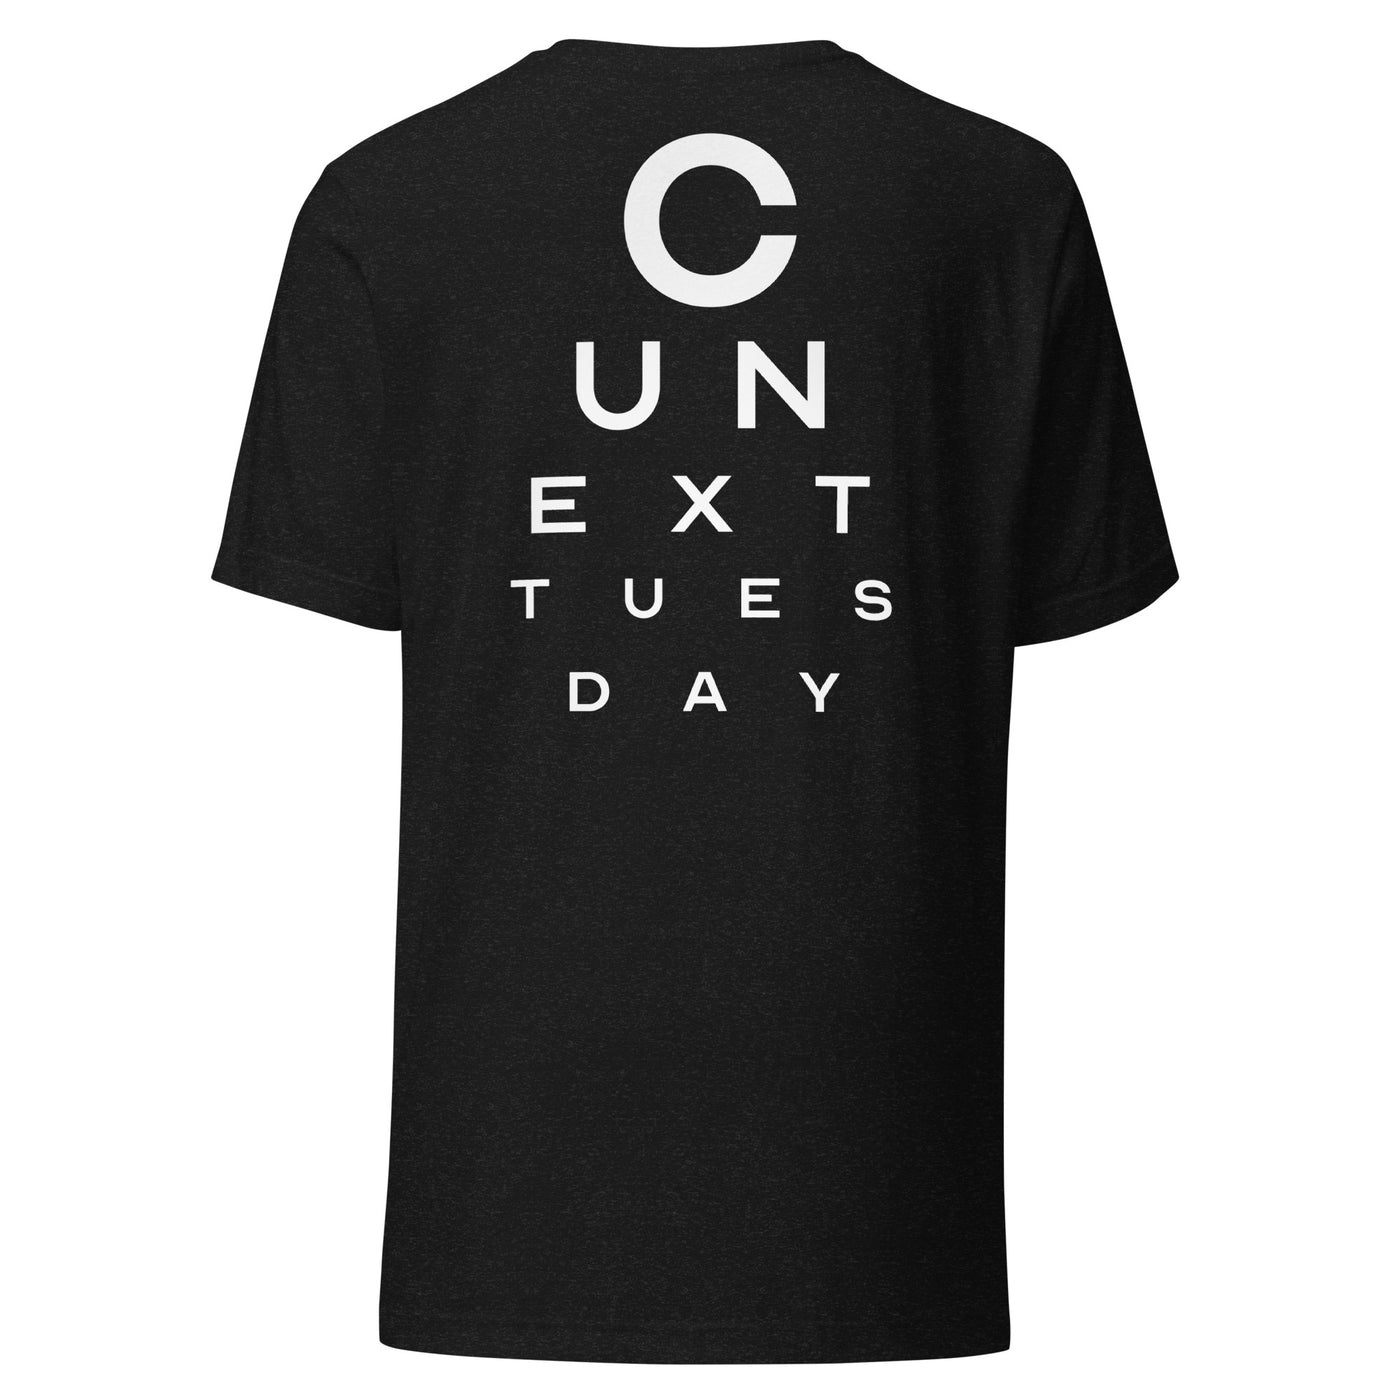 C U NEXT TUESDAY T-Shirt Wales Edition